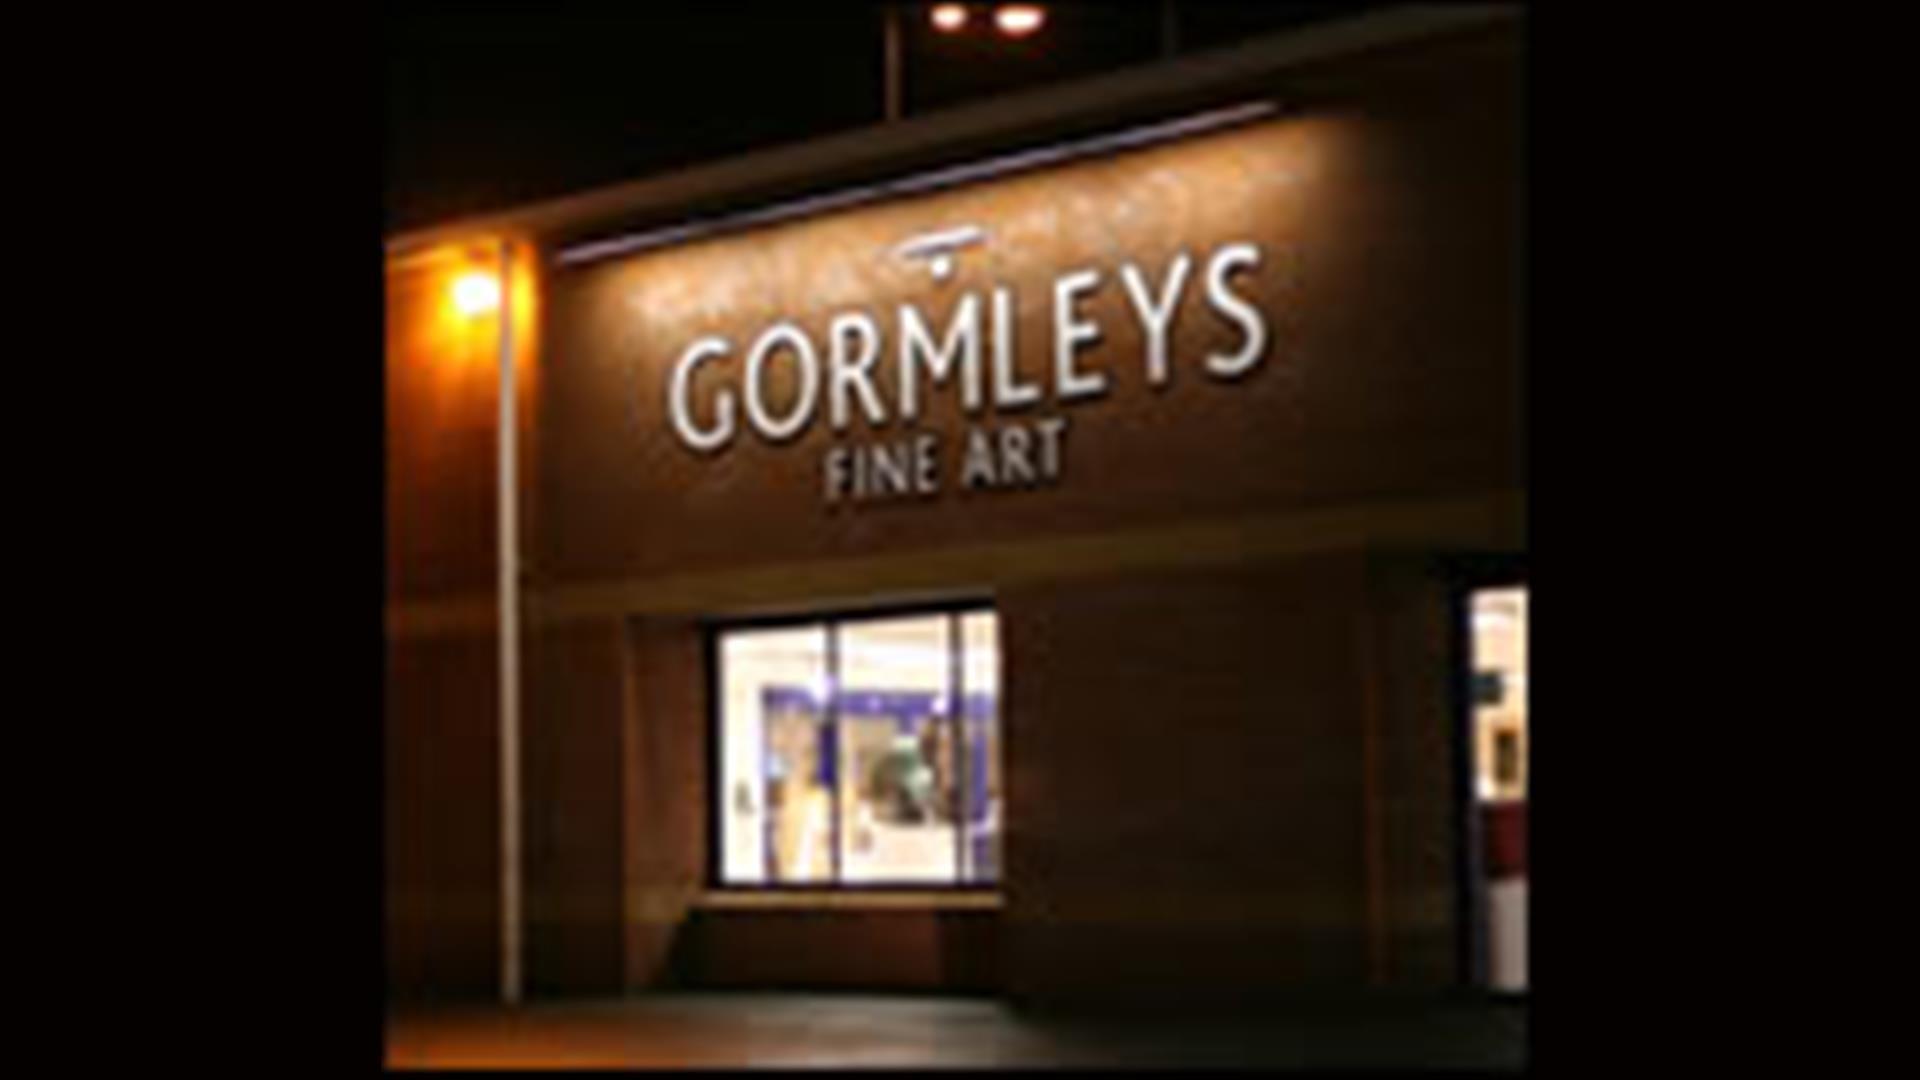 Gormleys Fine Art (Omagh gallery)